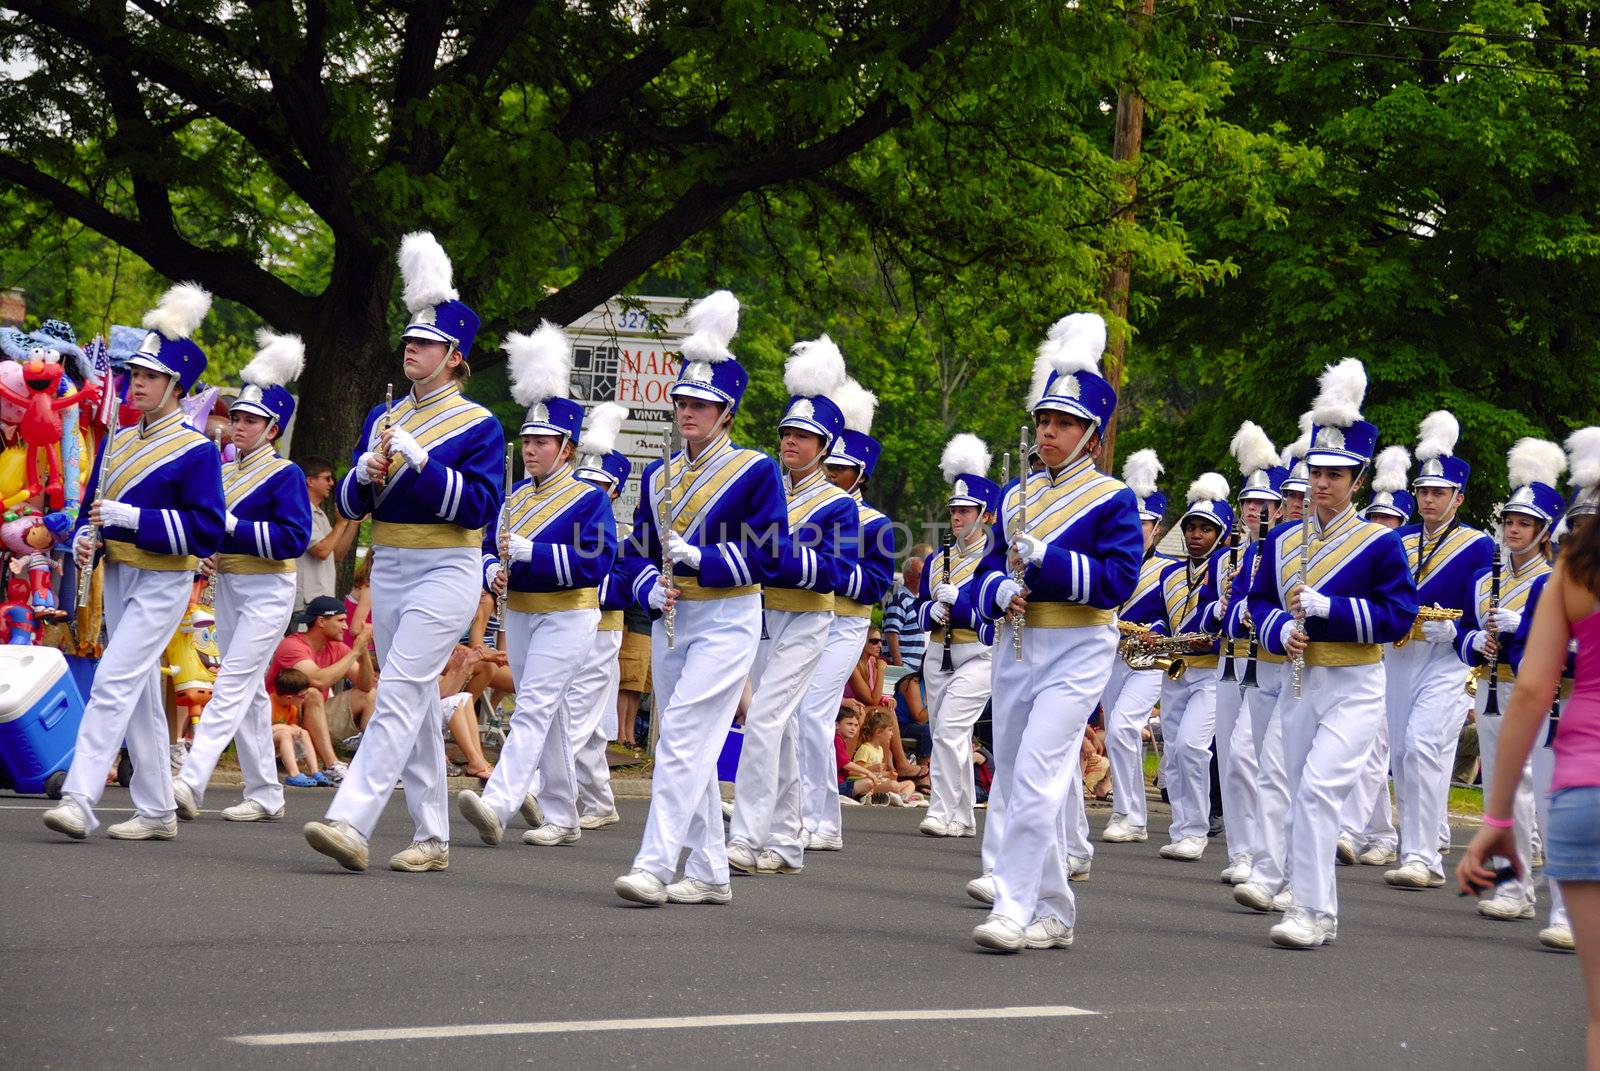 A group of band men playing at a local parade

